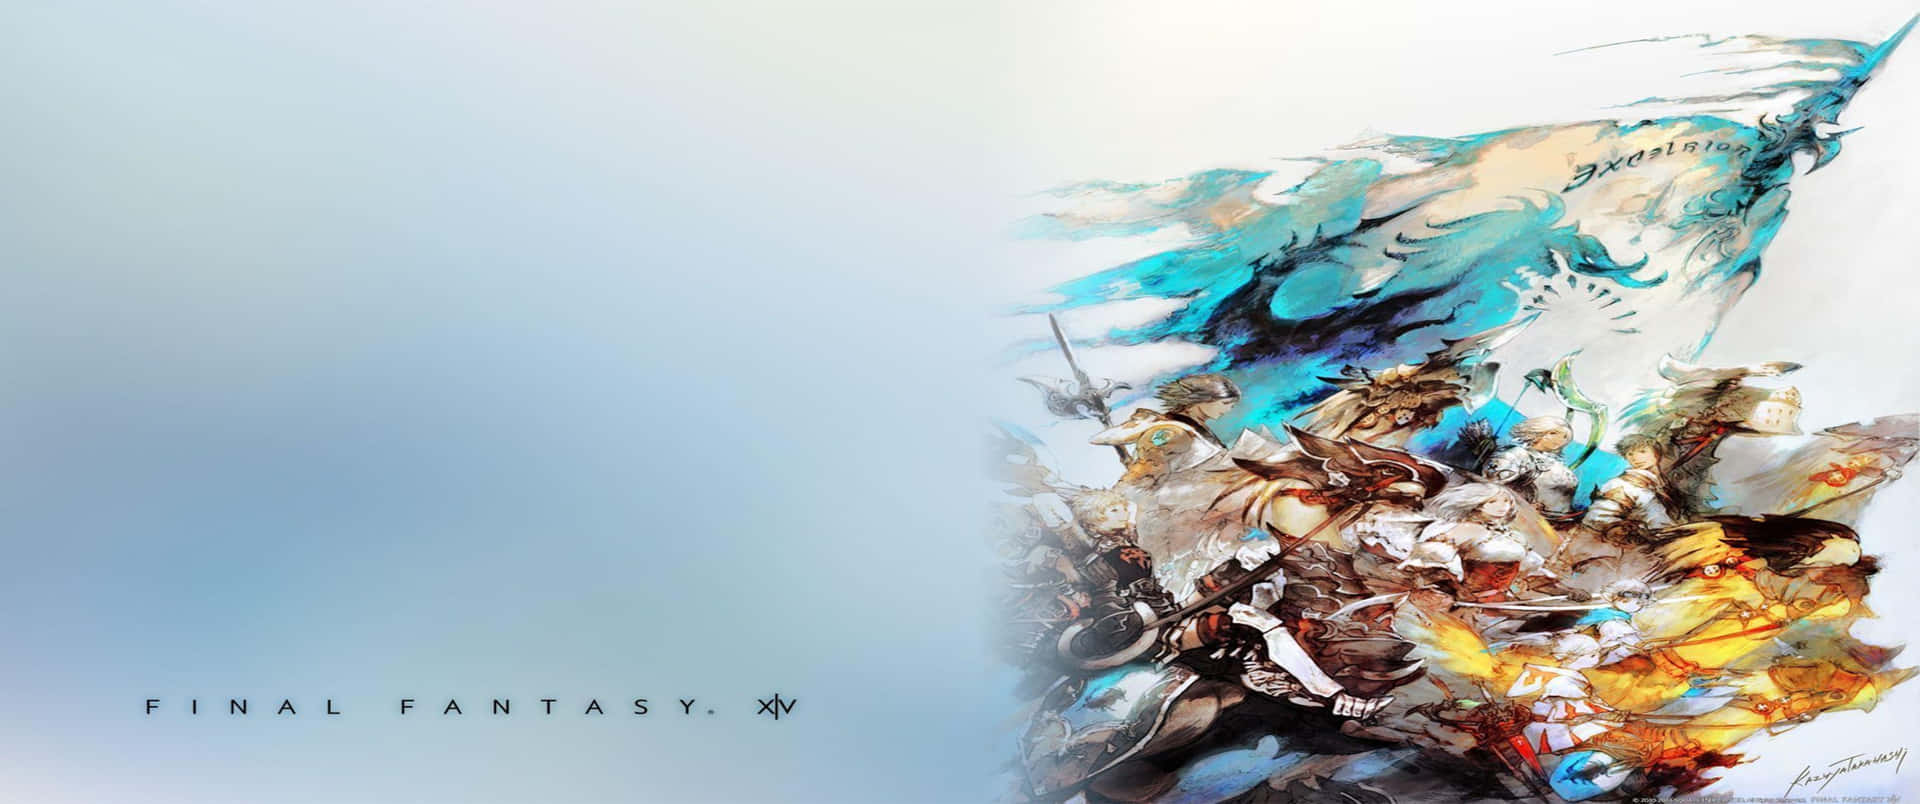 "A breathtaking landscape of the world of Final Fantasy Xv"